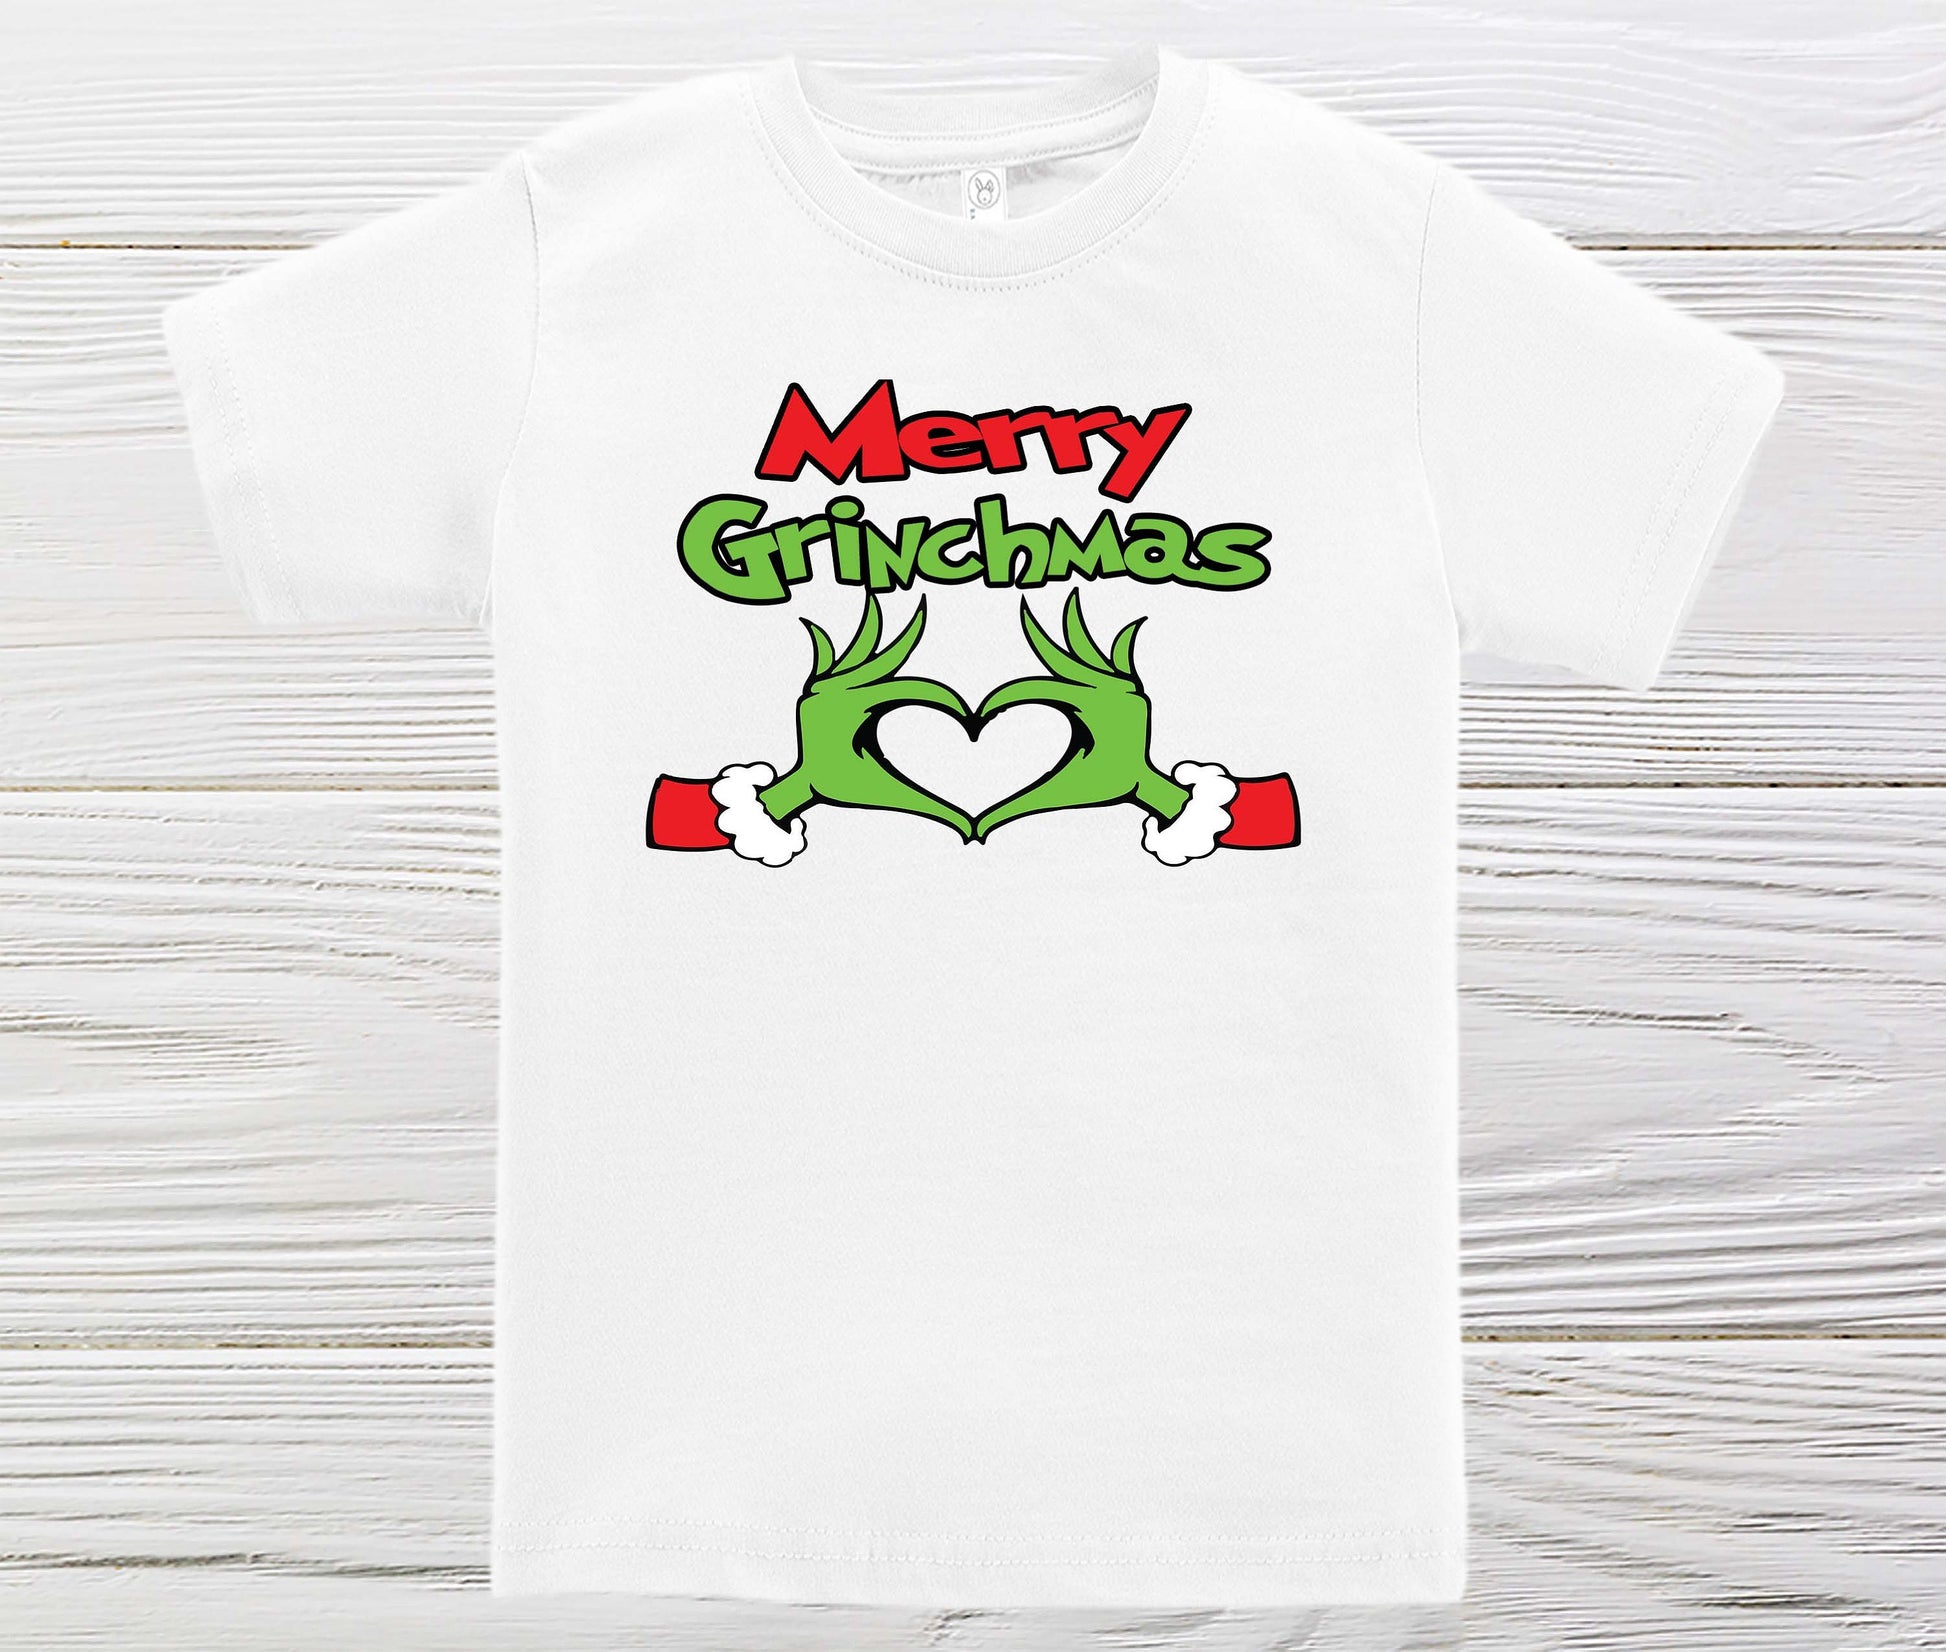 Merry Grinchmas shirt